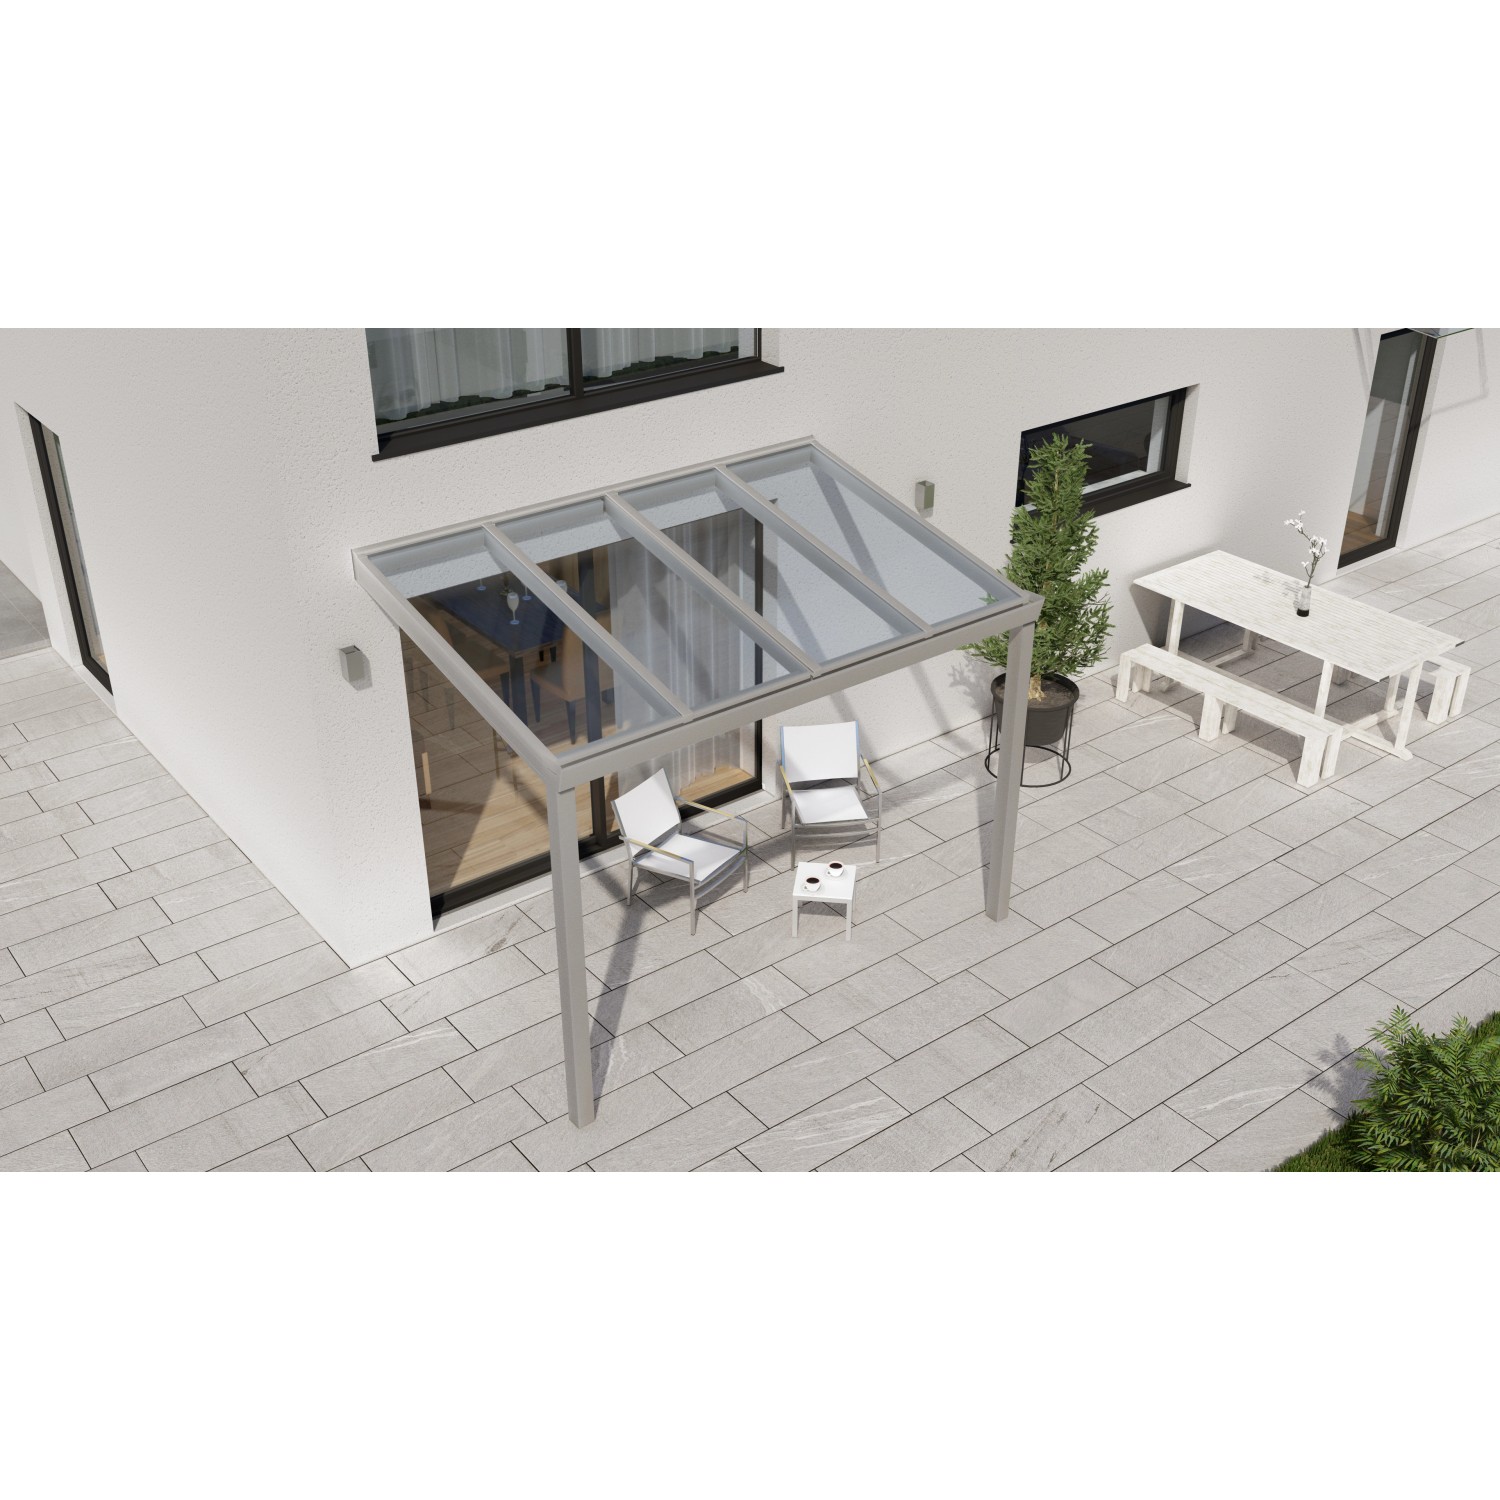 Terrassenüberdachung Professional 300 cm x 250 cm Grau Struktur Glas von GARDENDREAMS